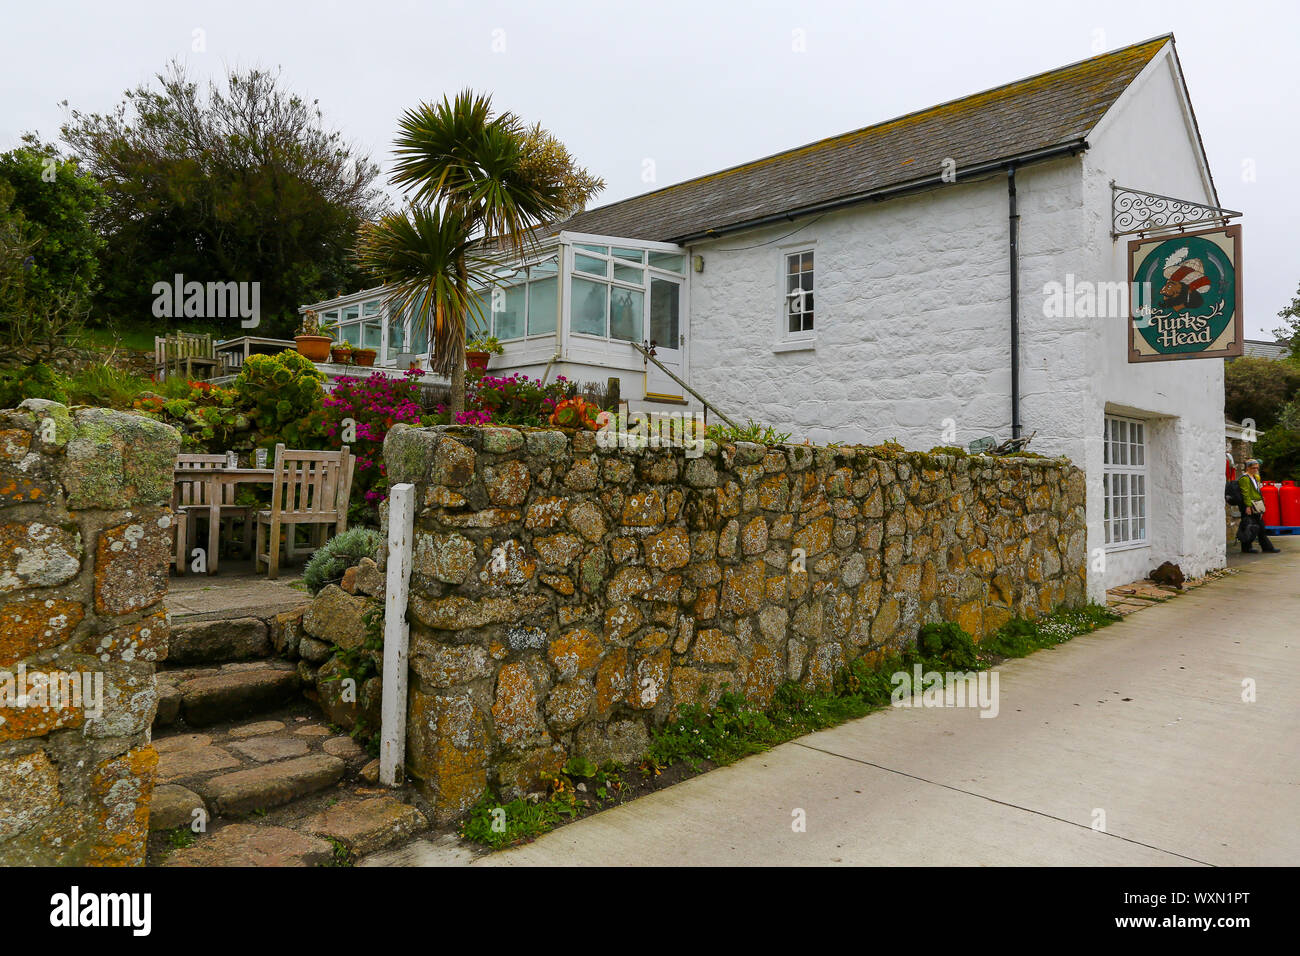 Der Turks Head Public House oder Pub auf St. Agnes Insel, Isles of Scilly, Cornwall, England, Großbritannien Stockfoto